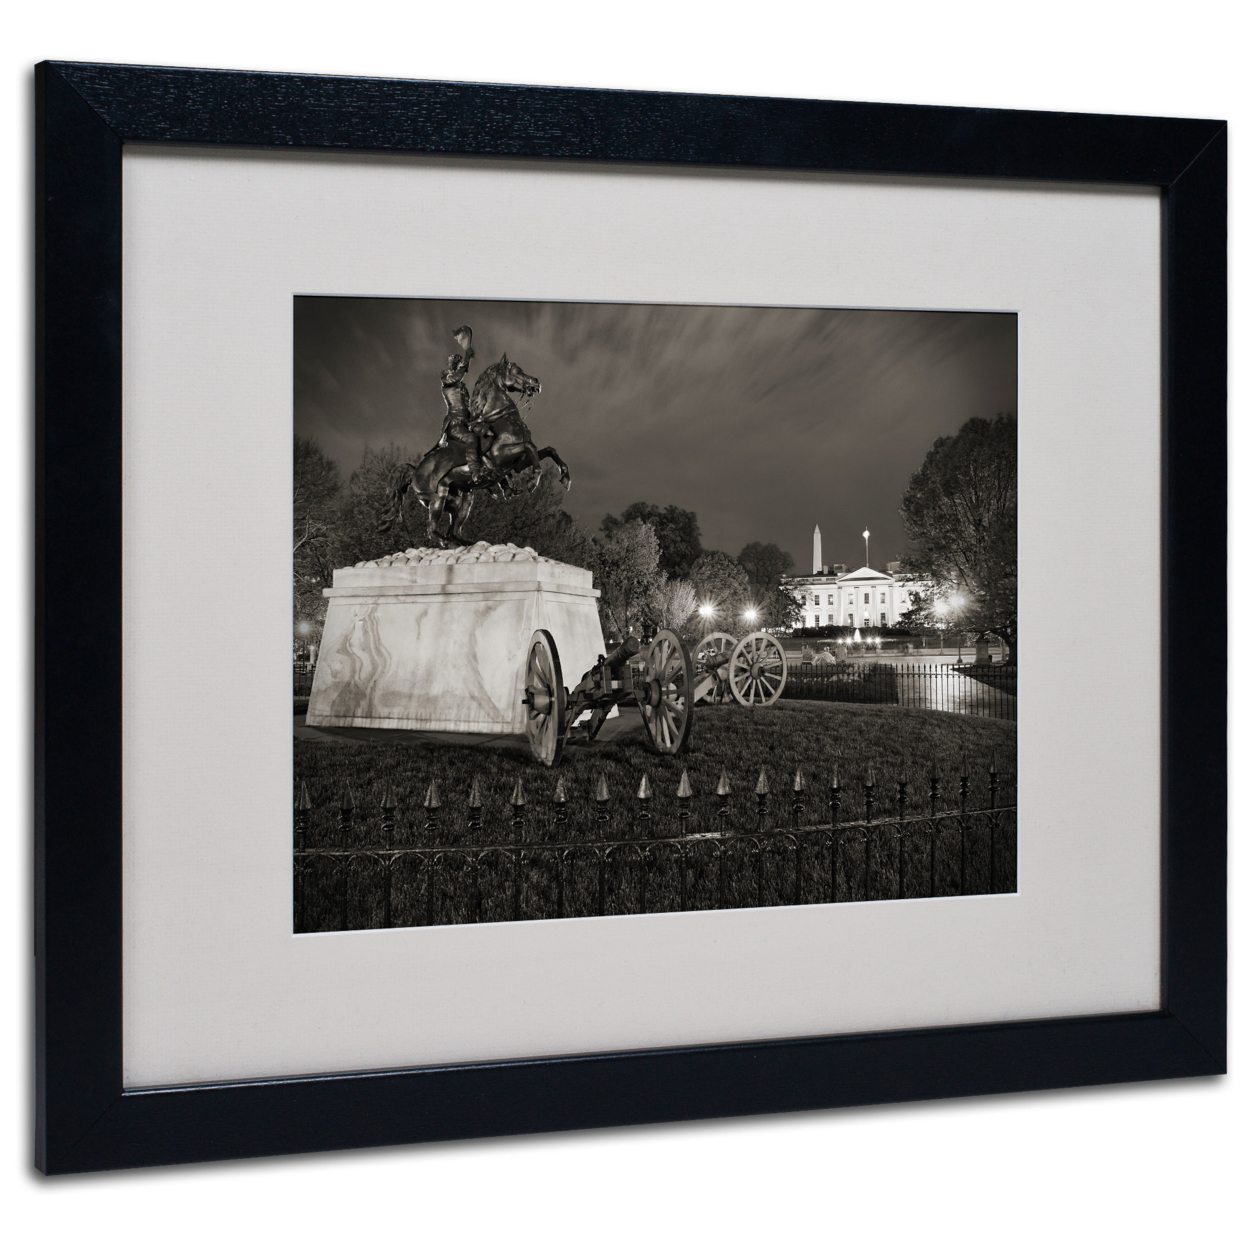 Gregory O'Hanlon 'Lafayette Square' Black Wooden Framed Art 18 X 22 Inches